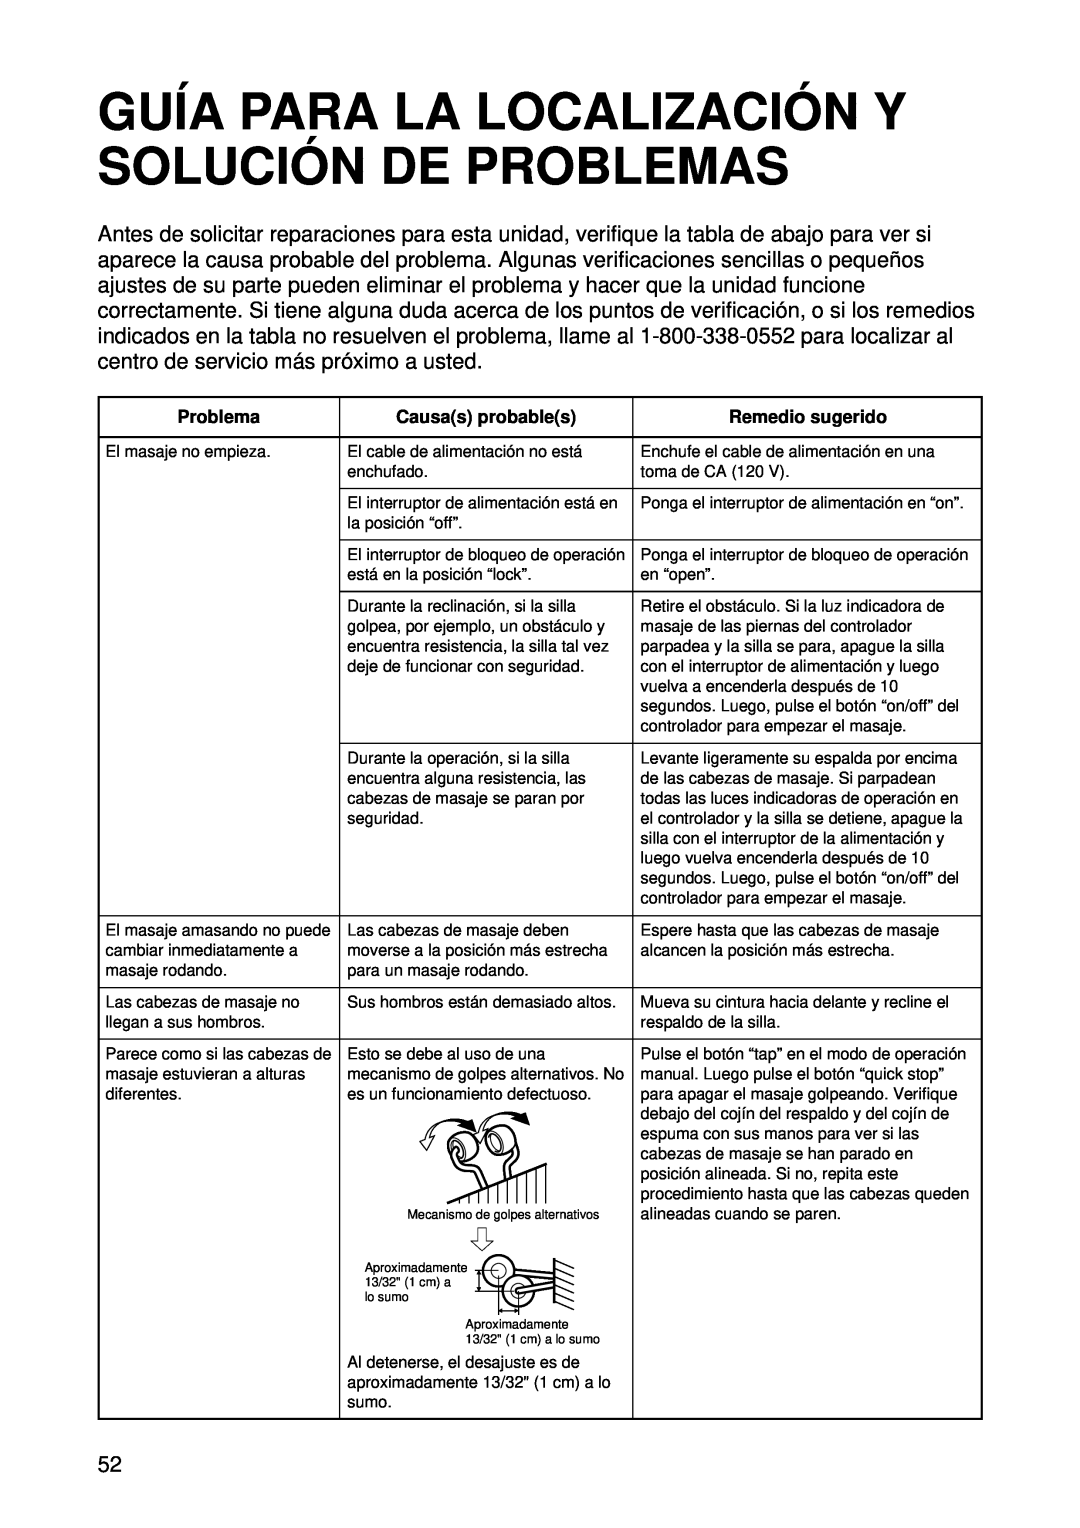 Panasonic EP1015 manuel dutilisation Problema, Causas probables, Remedio sugerido 